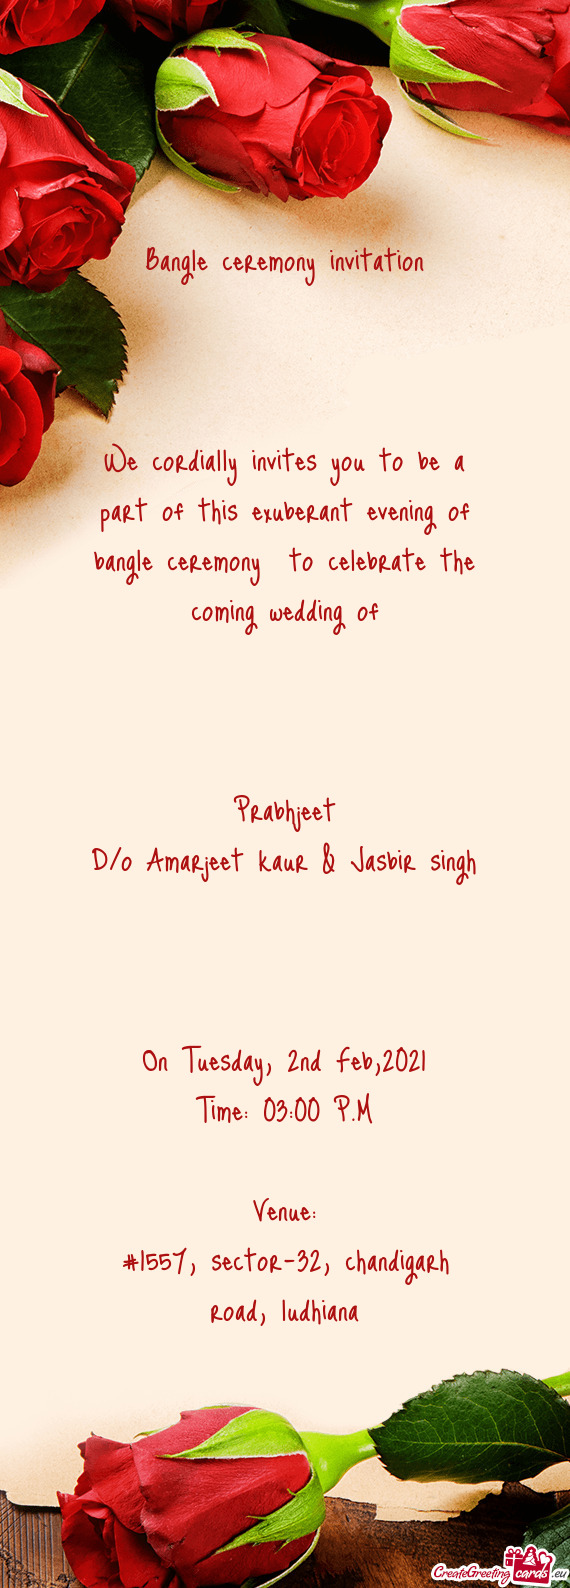 F bangle ceremony to celebrate the coming wedding of
 
 
 
 Prabhjeet
 D/o Amarjeet kaur & Jasbir s